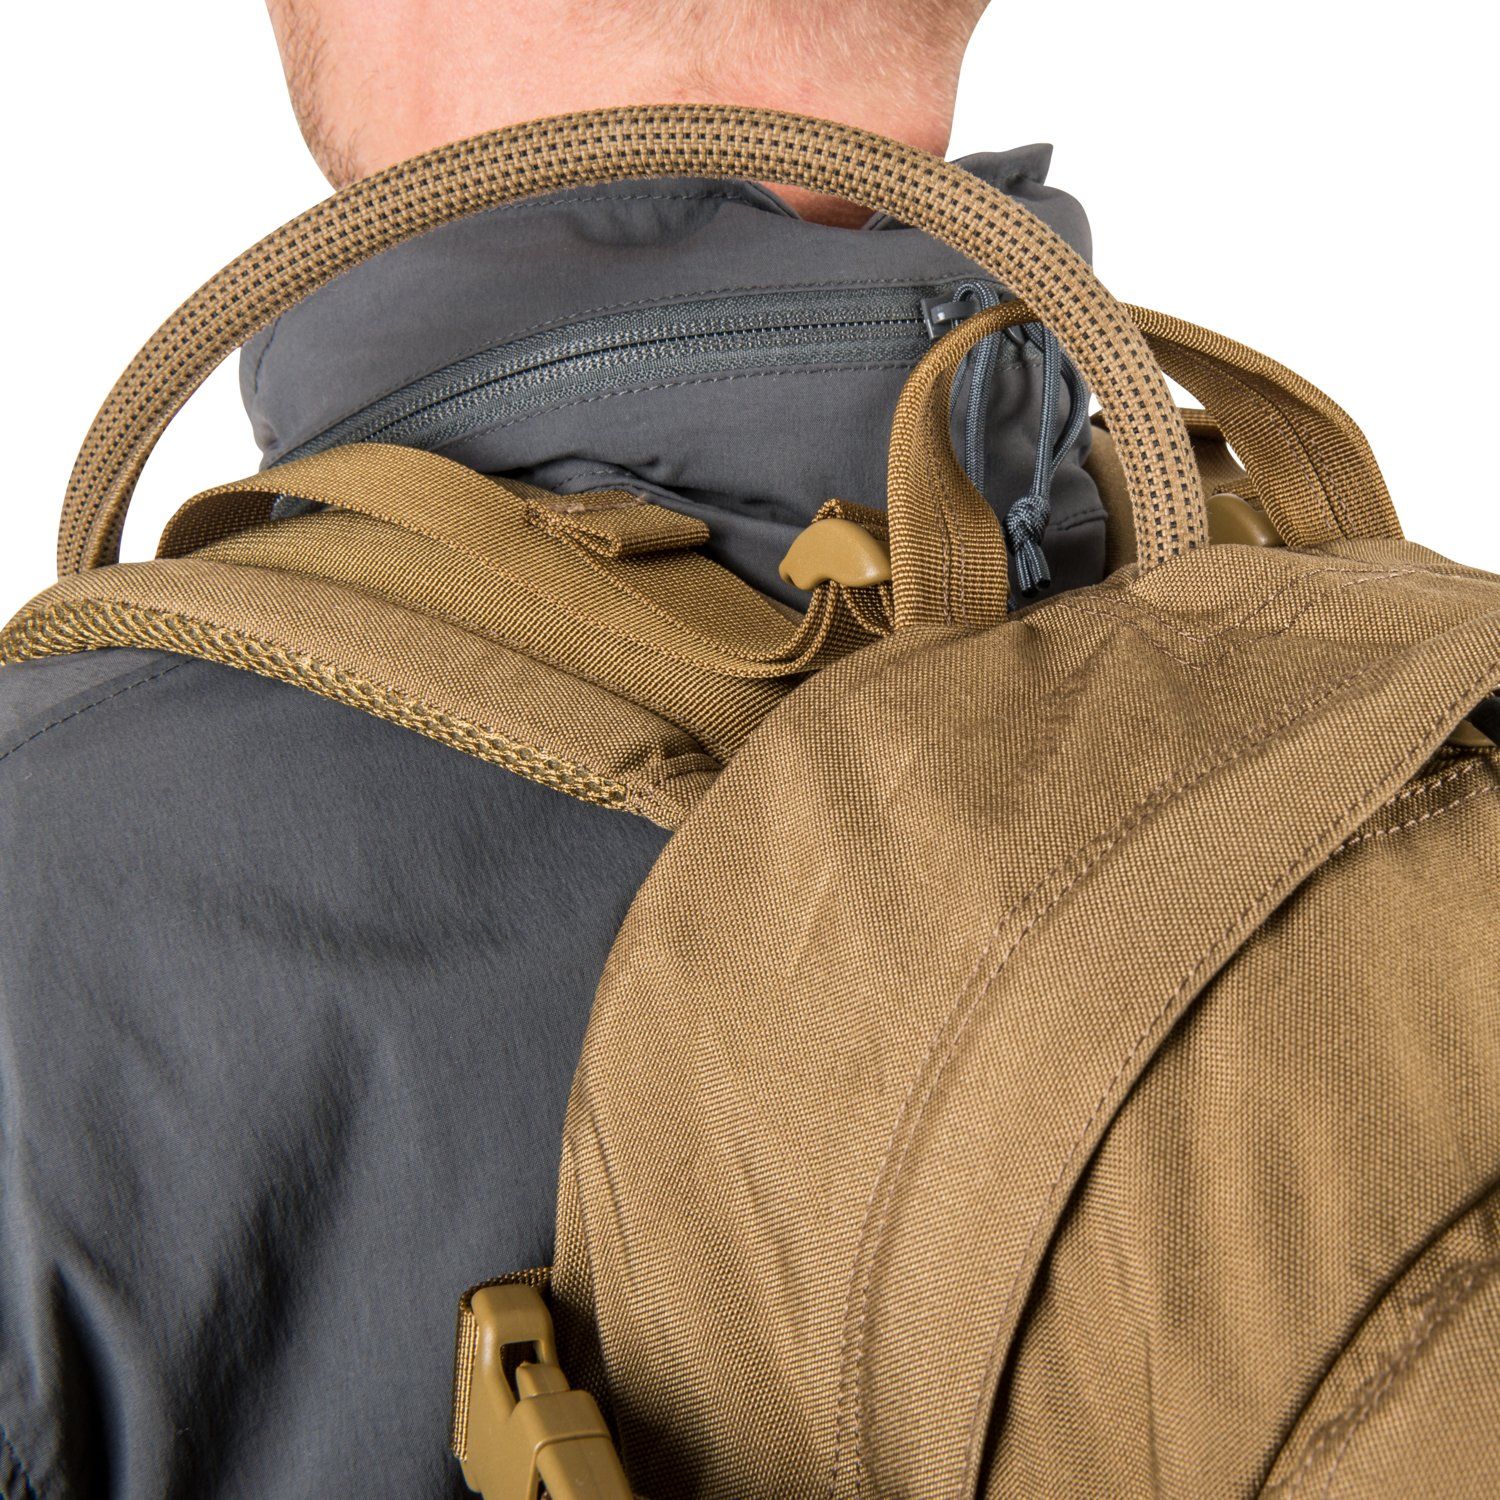 RATEL Mk2 Backpack - Cordura® - Multicam®